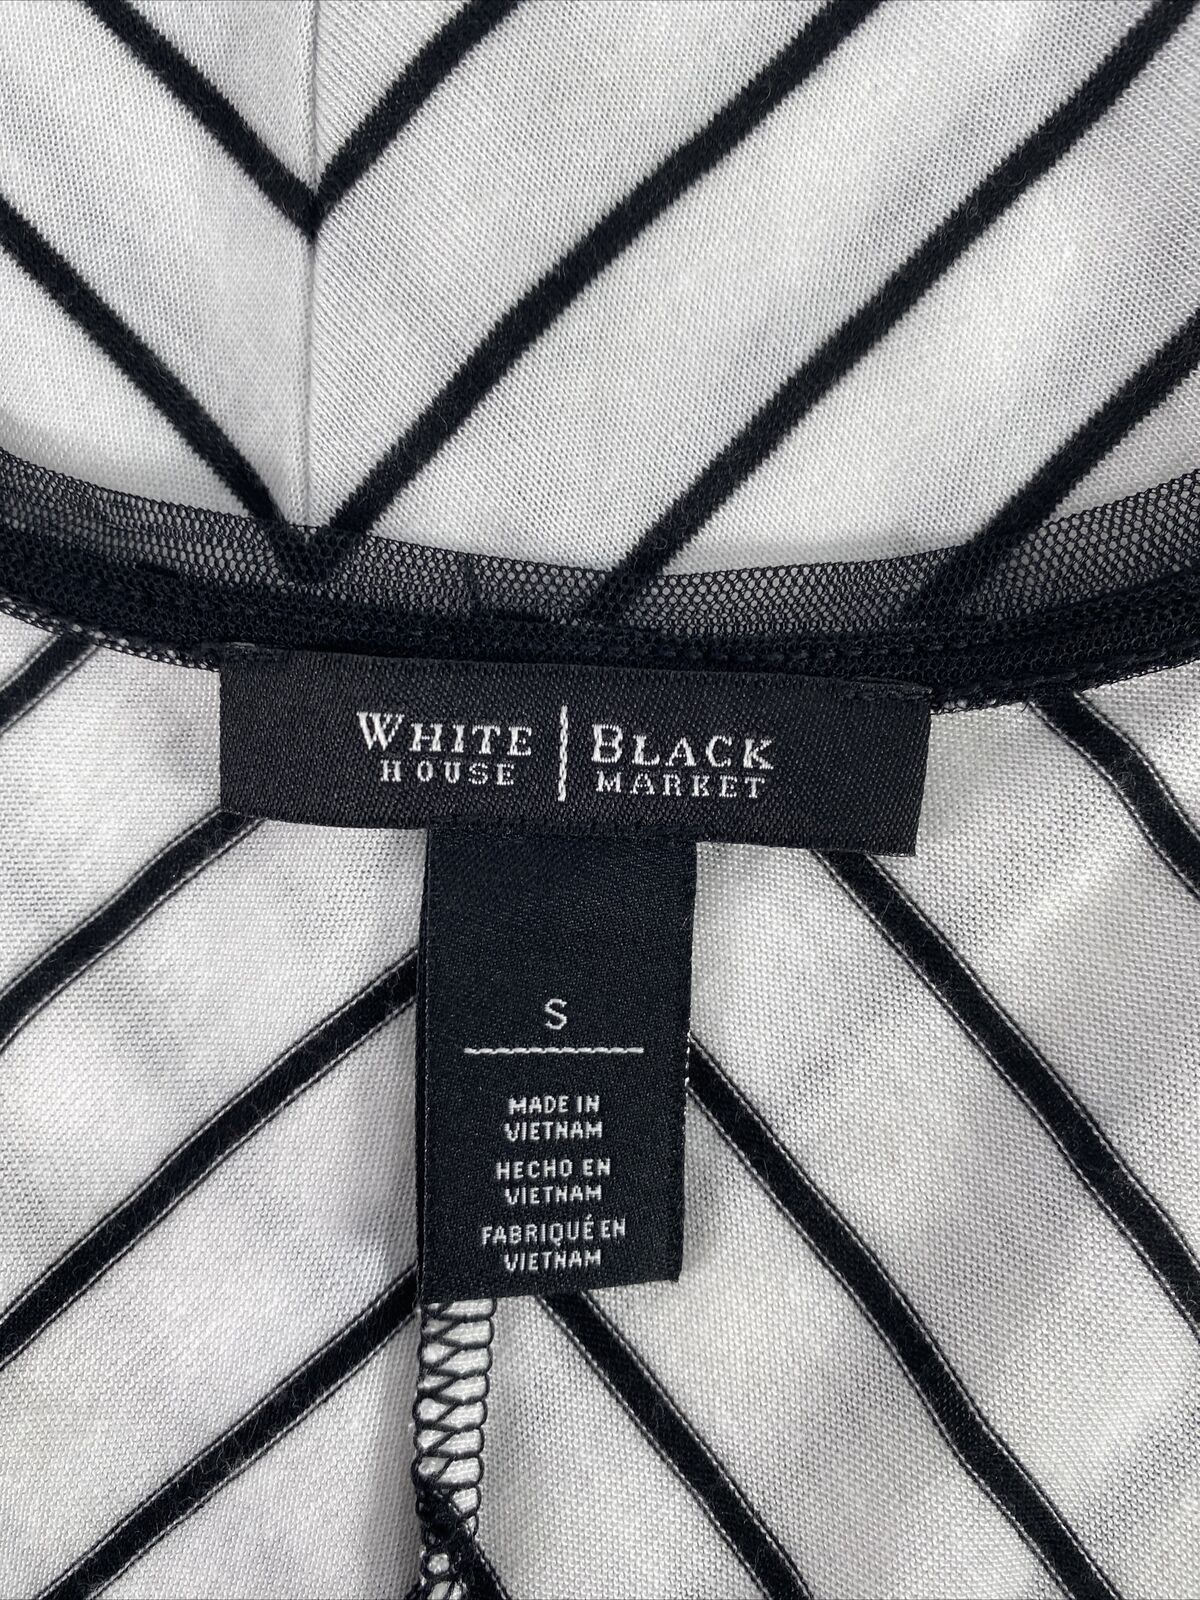 White House Black Market Women's White Lace Accent Striped Top - S